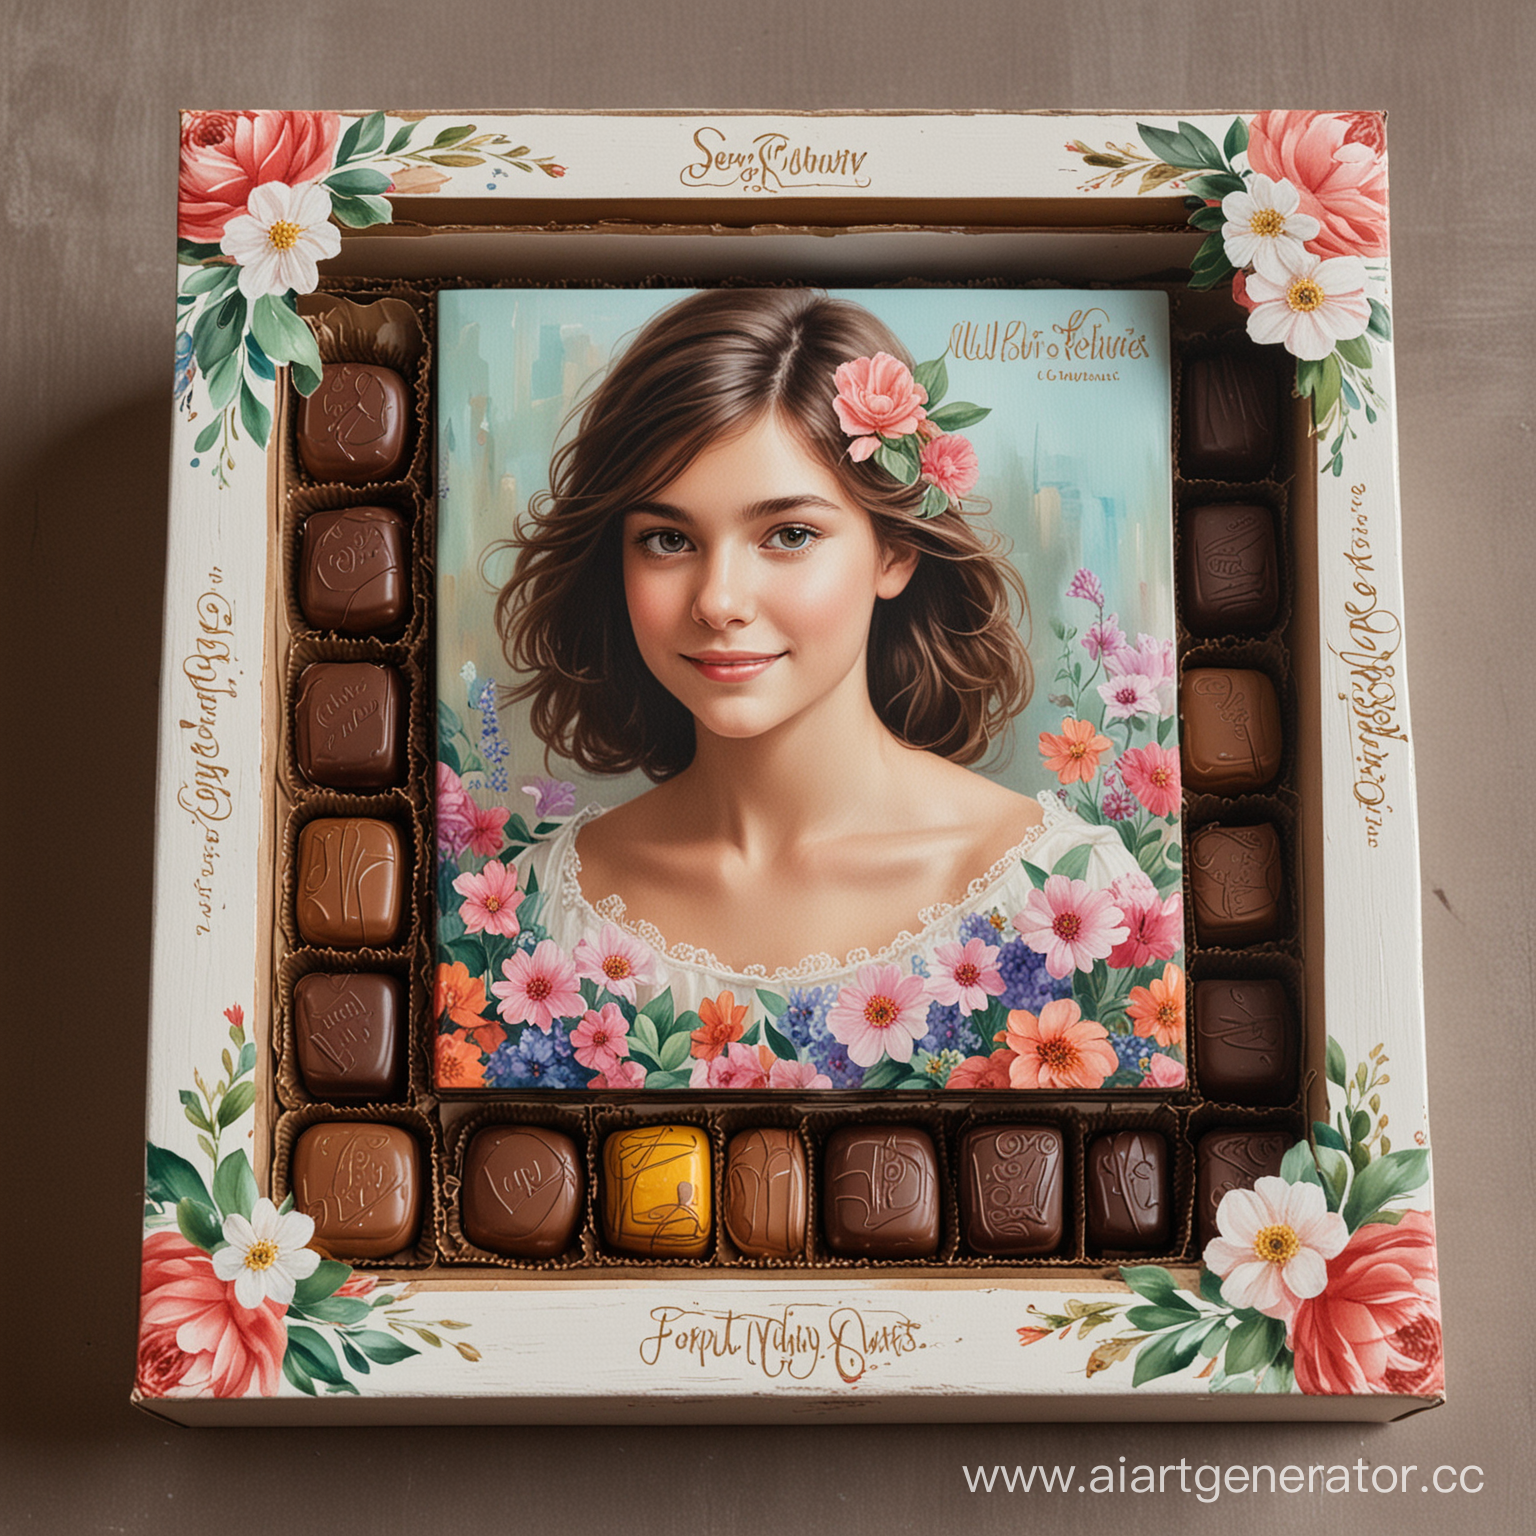 Живопись: коробка конфет на которой нарисована девушка с цветами.